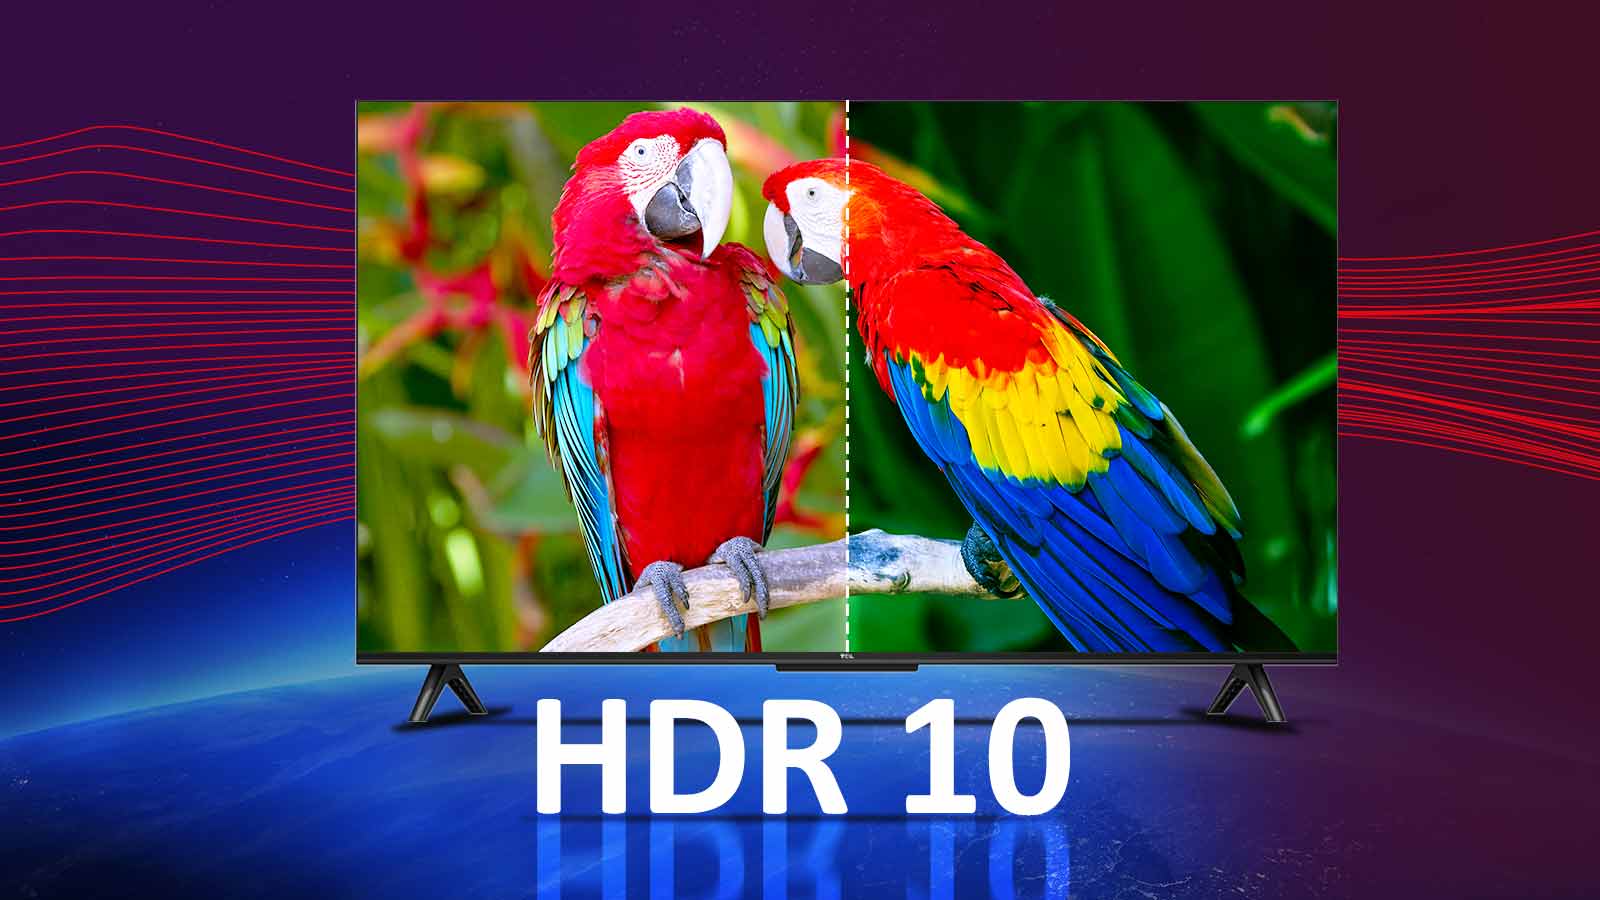 HDR 10